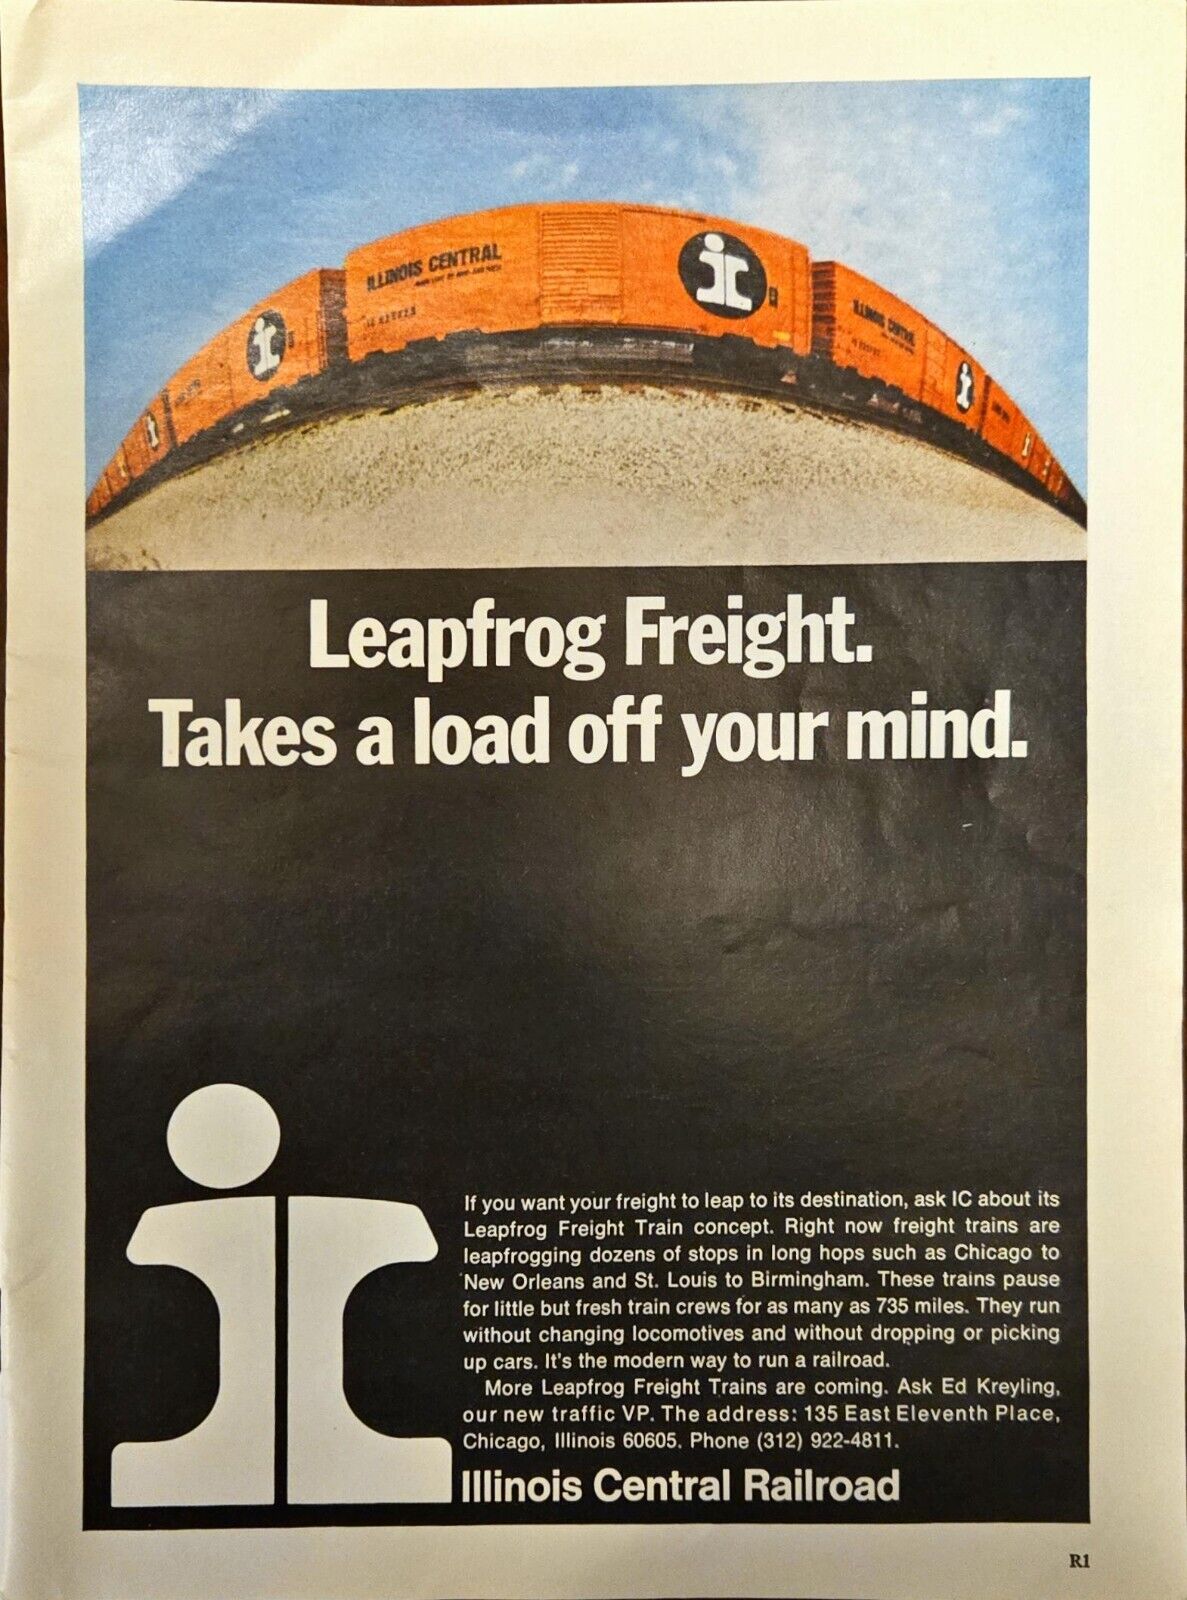 Illinois Central Railroad Leapfrog Freight Train Concept 1969 Vintage Print Ad